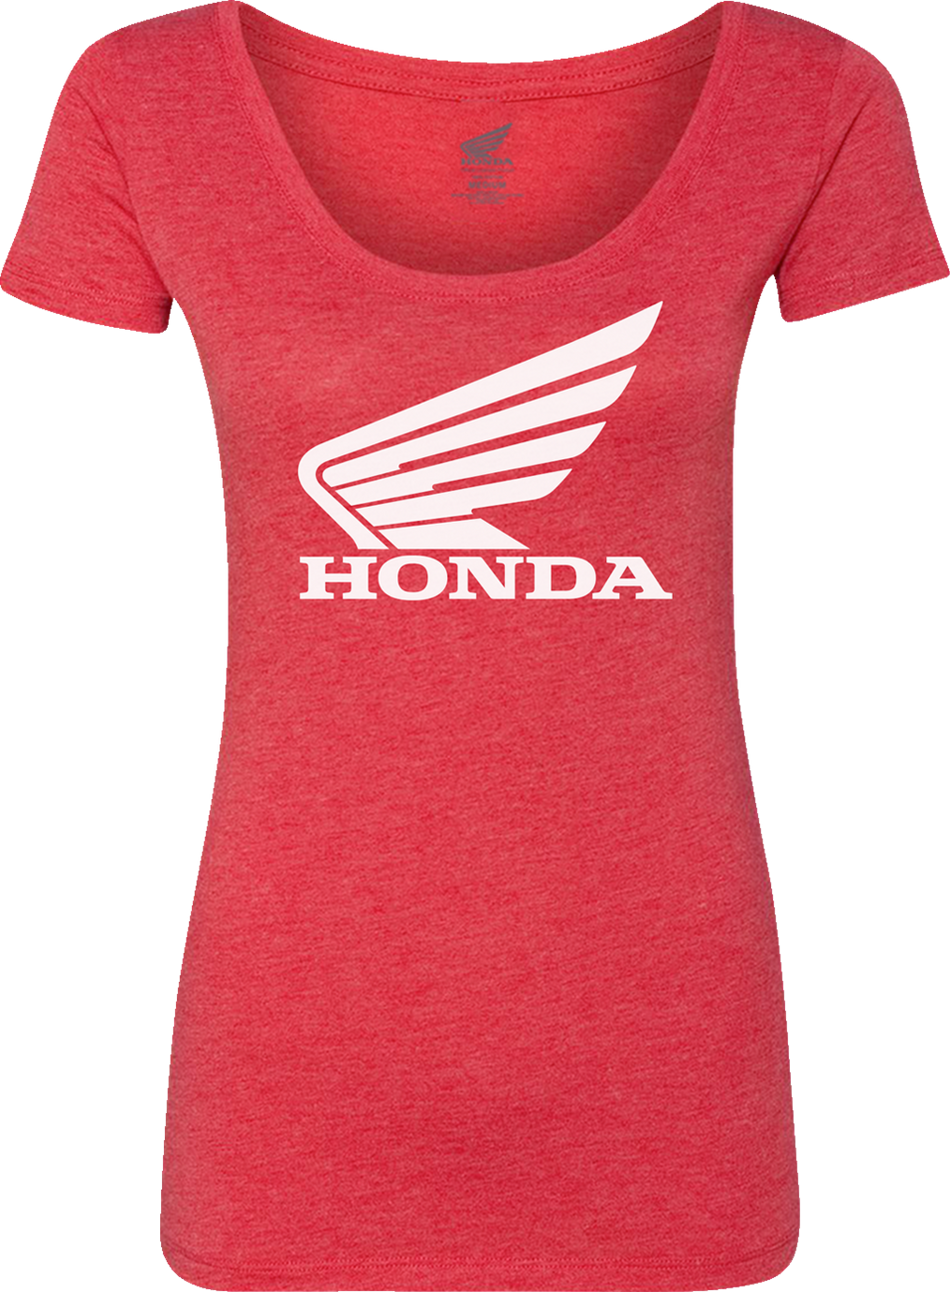 HONDA APPAREL Women's Honda Wing T-Shirt - Red - Small NP21S-L3029-S